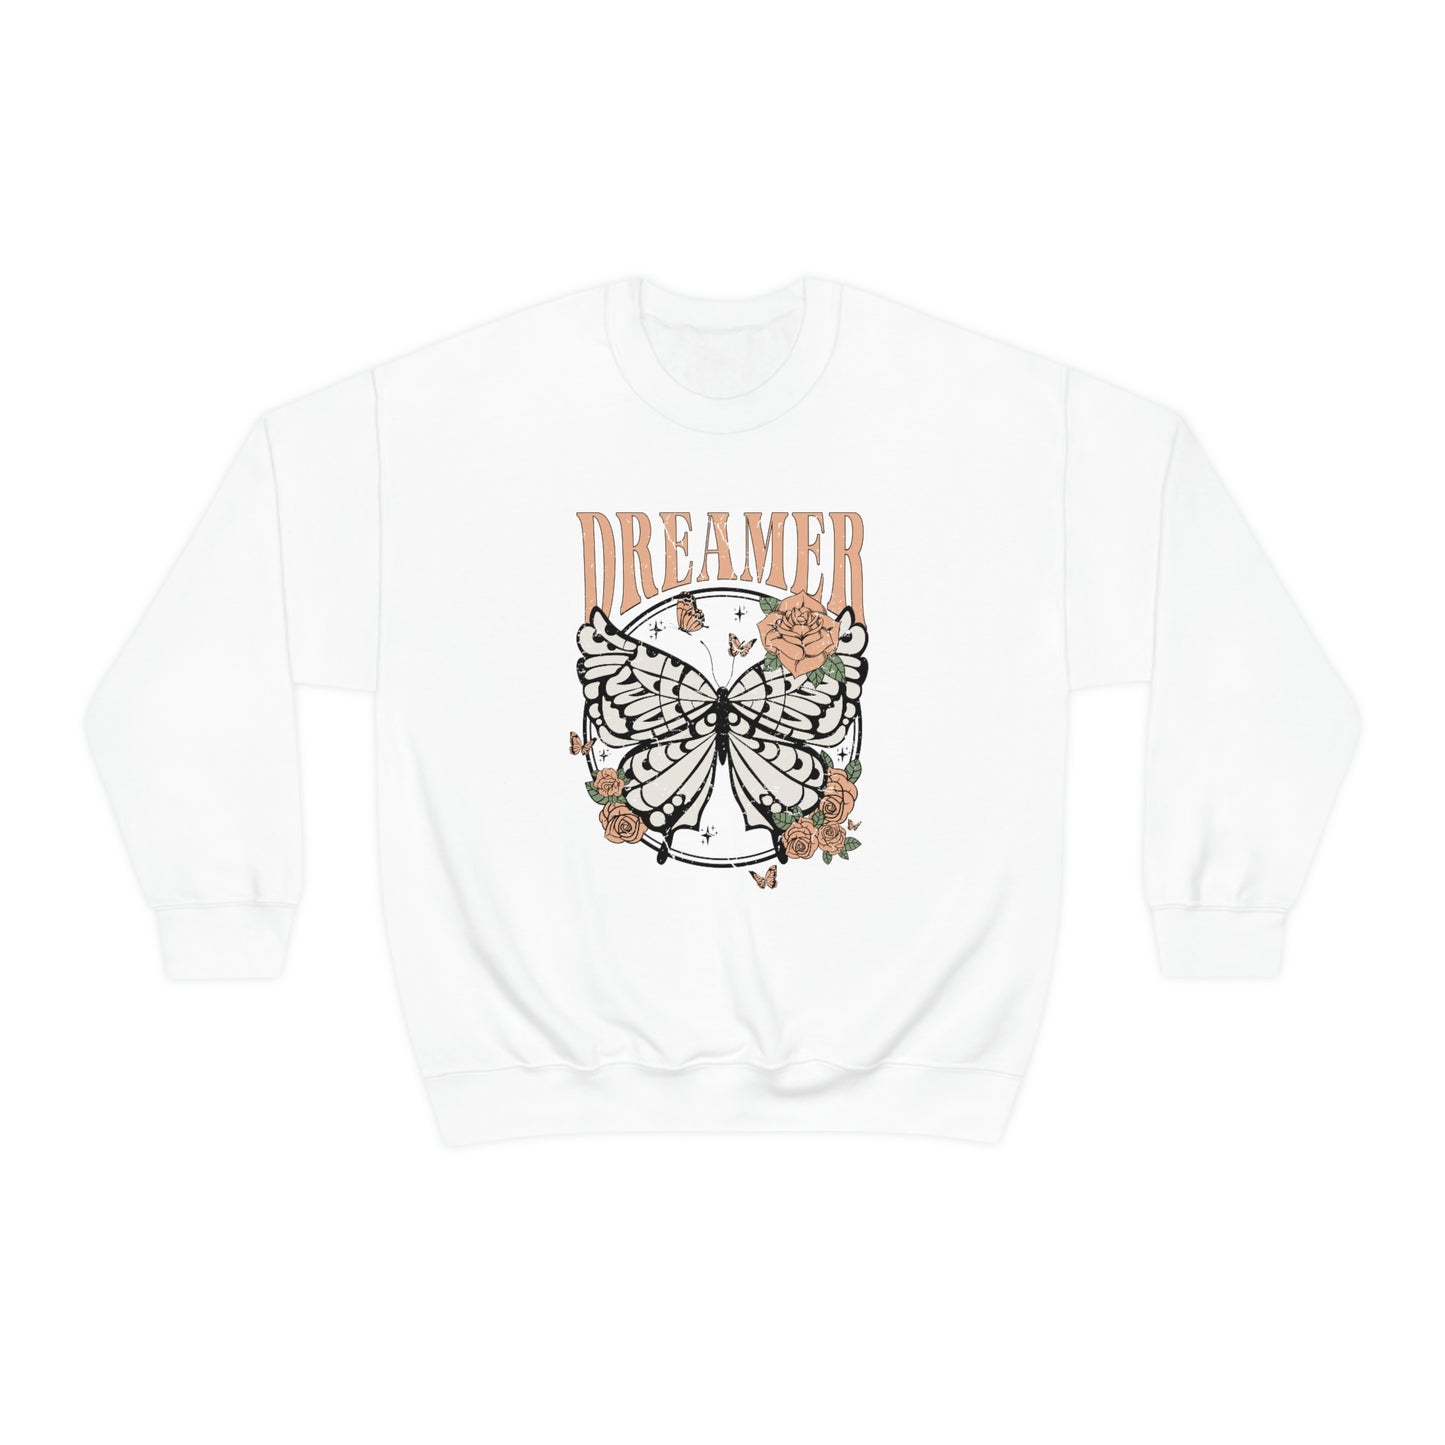 "Dreamer" Unisex Crewneck Sweatshirt